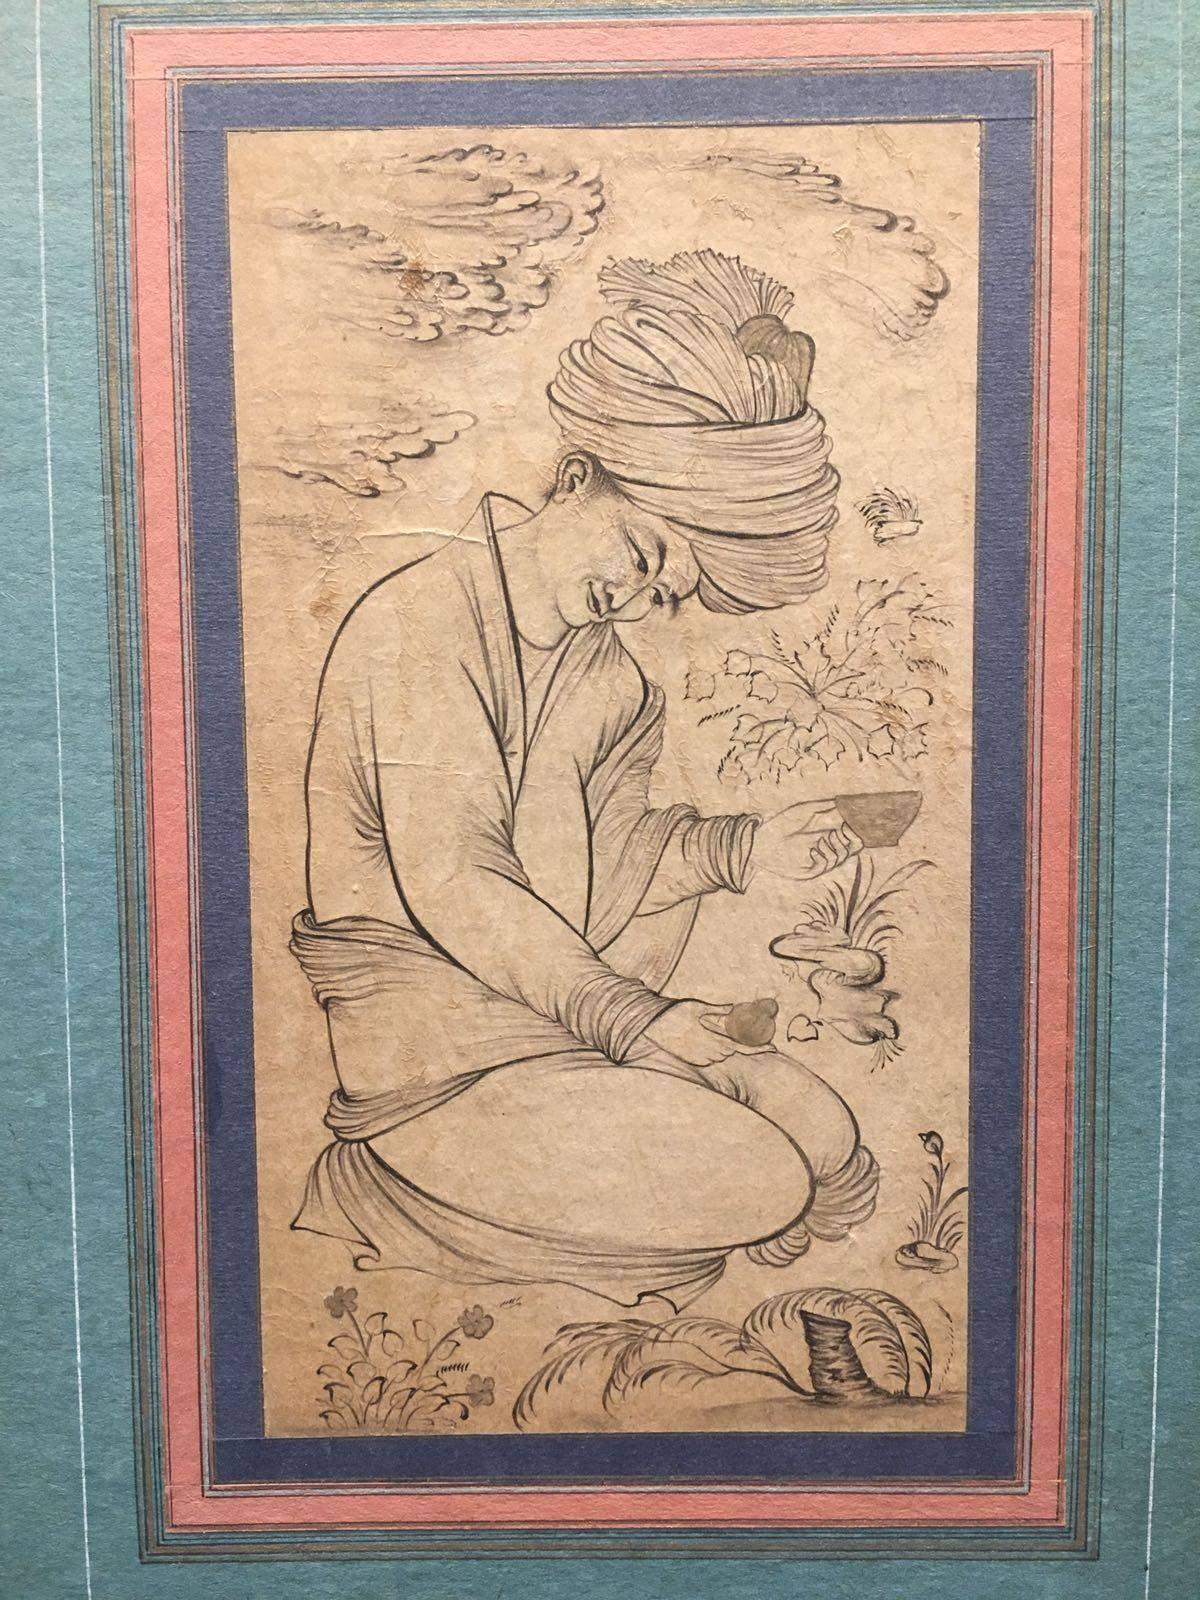 19th century, Qajari drawing 

Dimensions: 45 x 30cm.